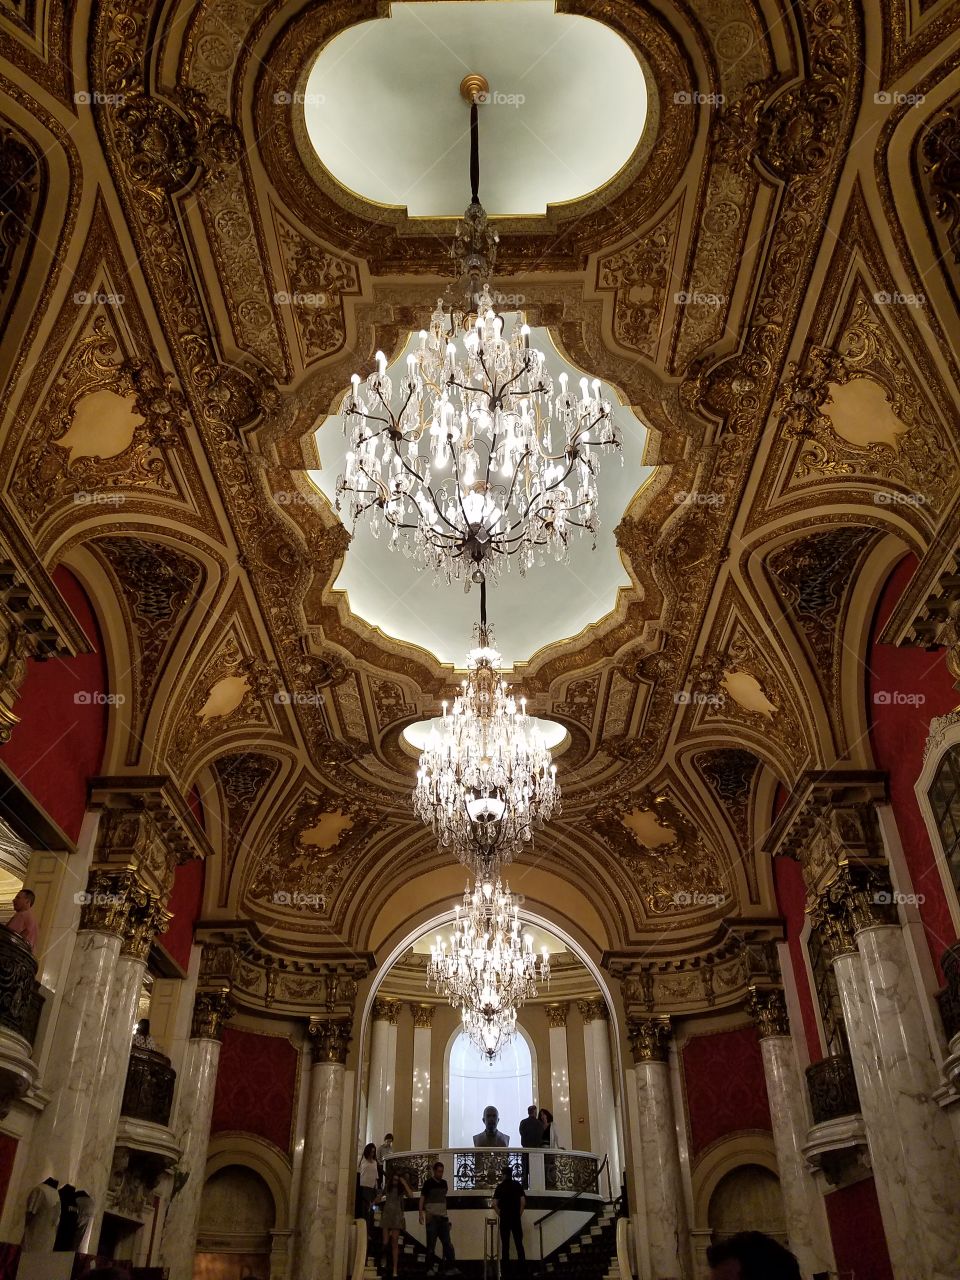 Opera House Chandelier ceiling